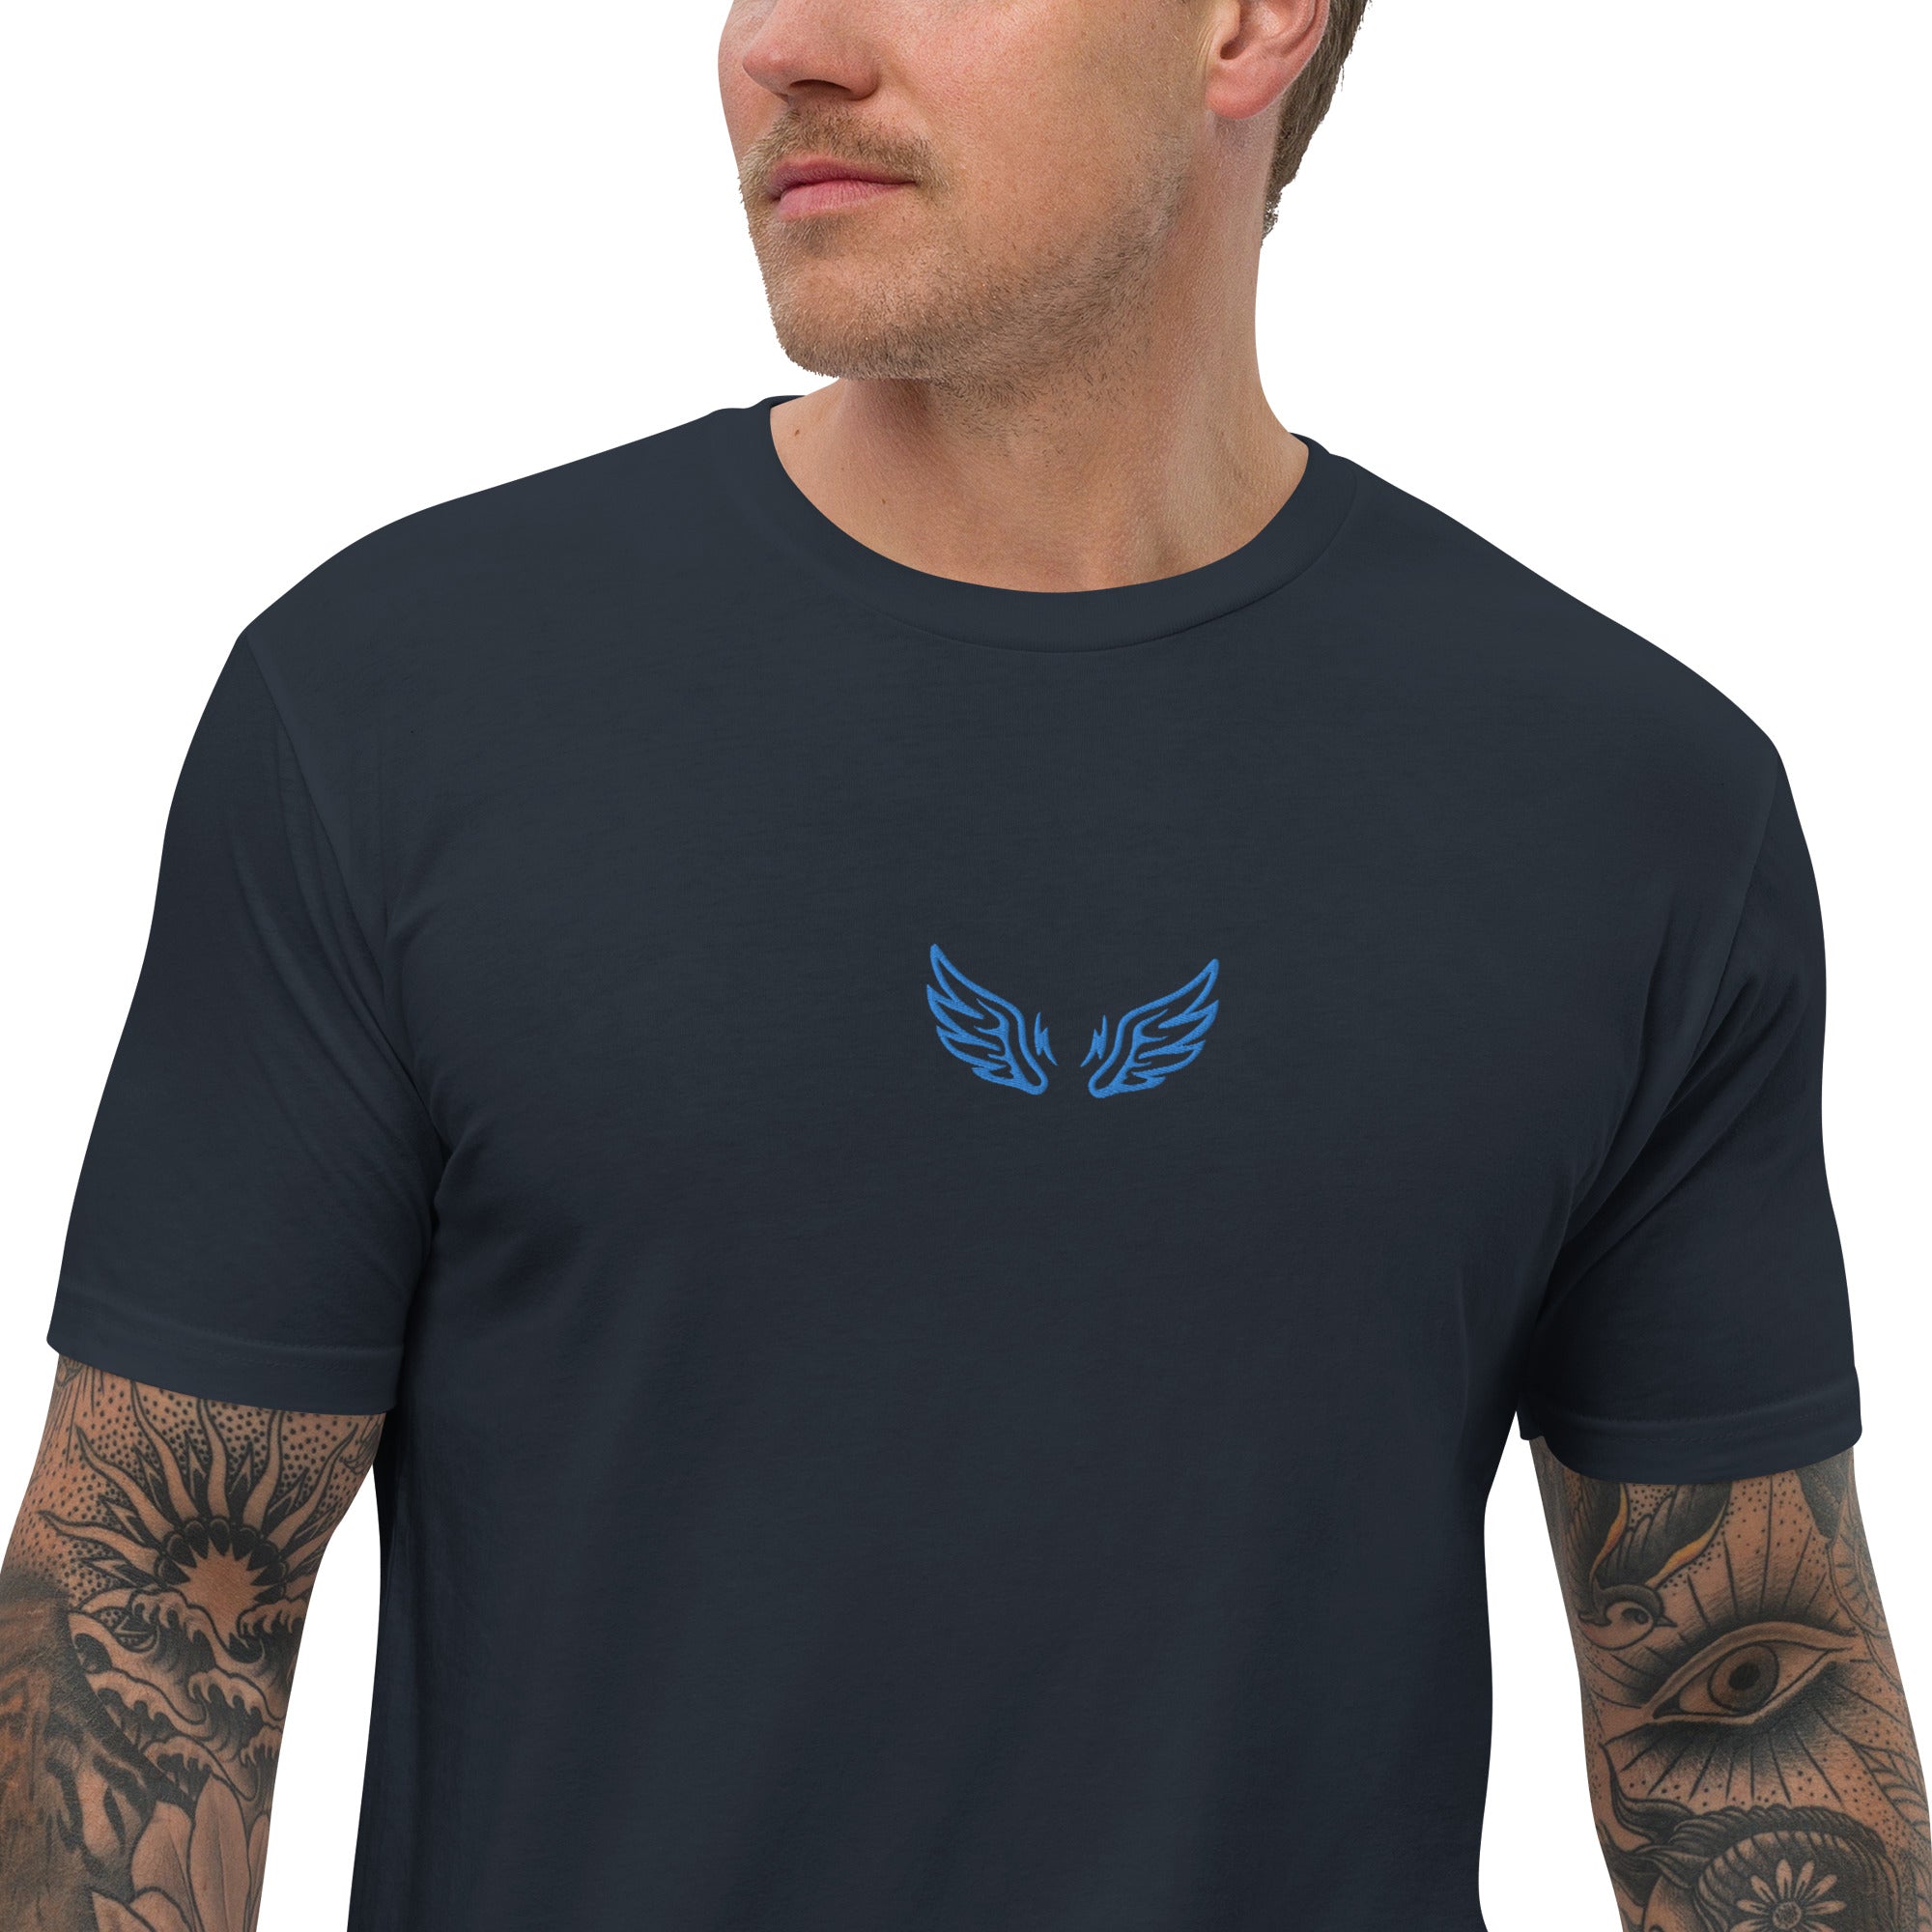 Voodoo Spirit Wings and Skull Men's T-shirt